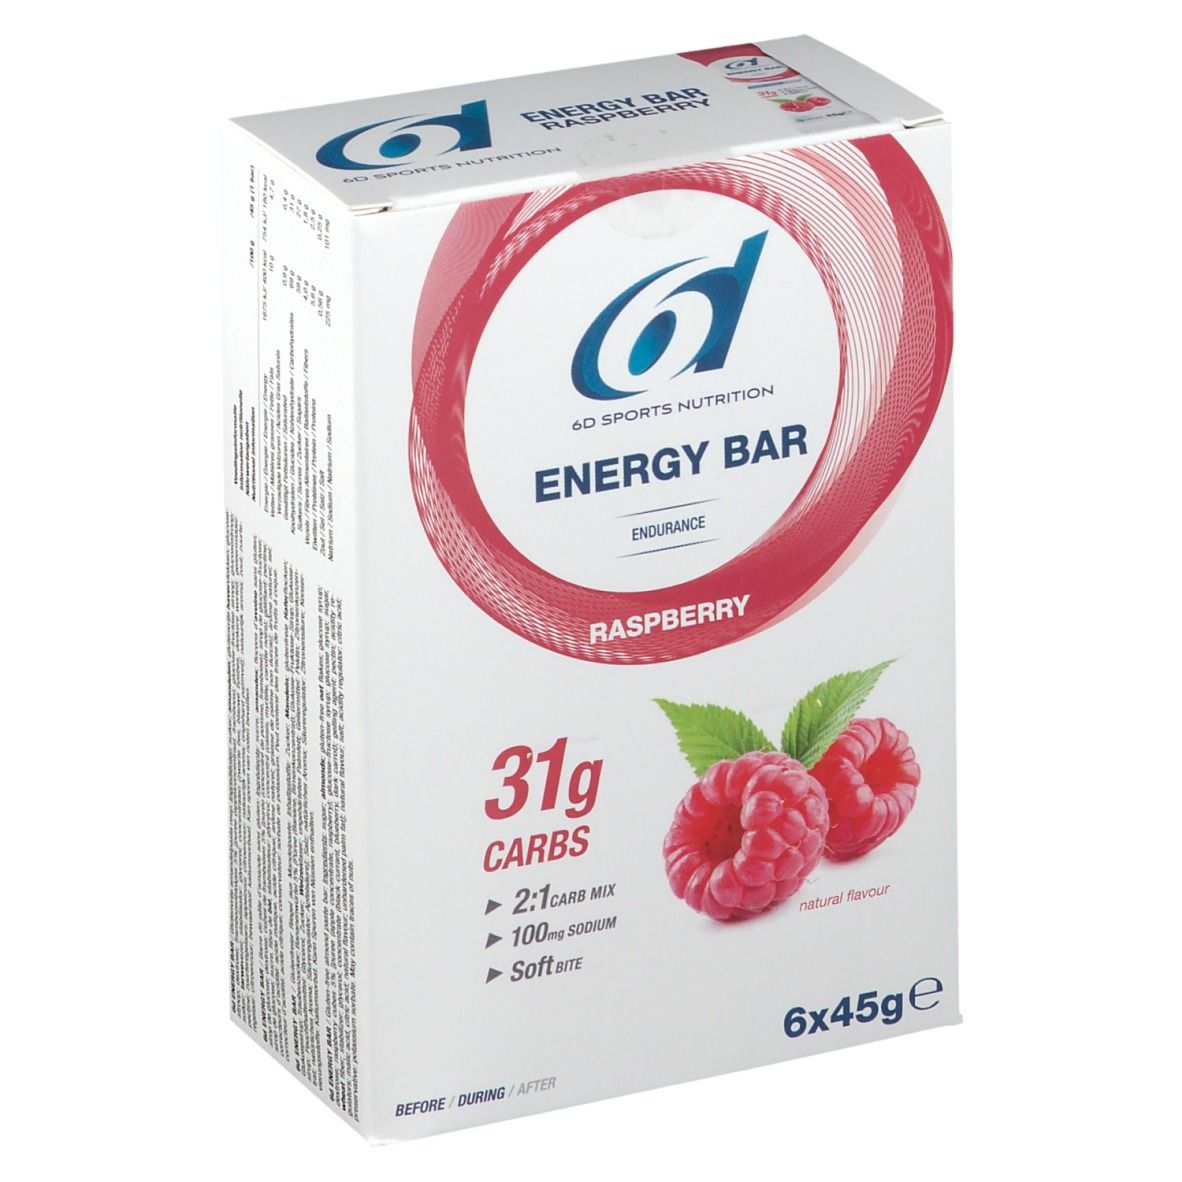 6D Sports Nutrition Energy Bar Himbeere